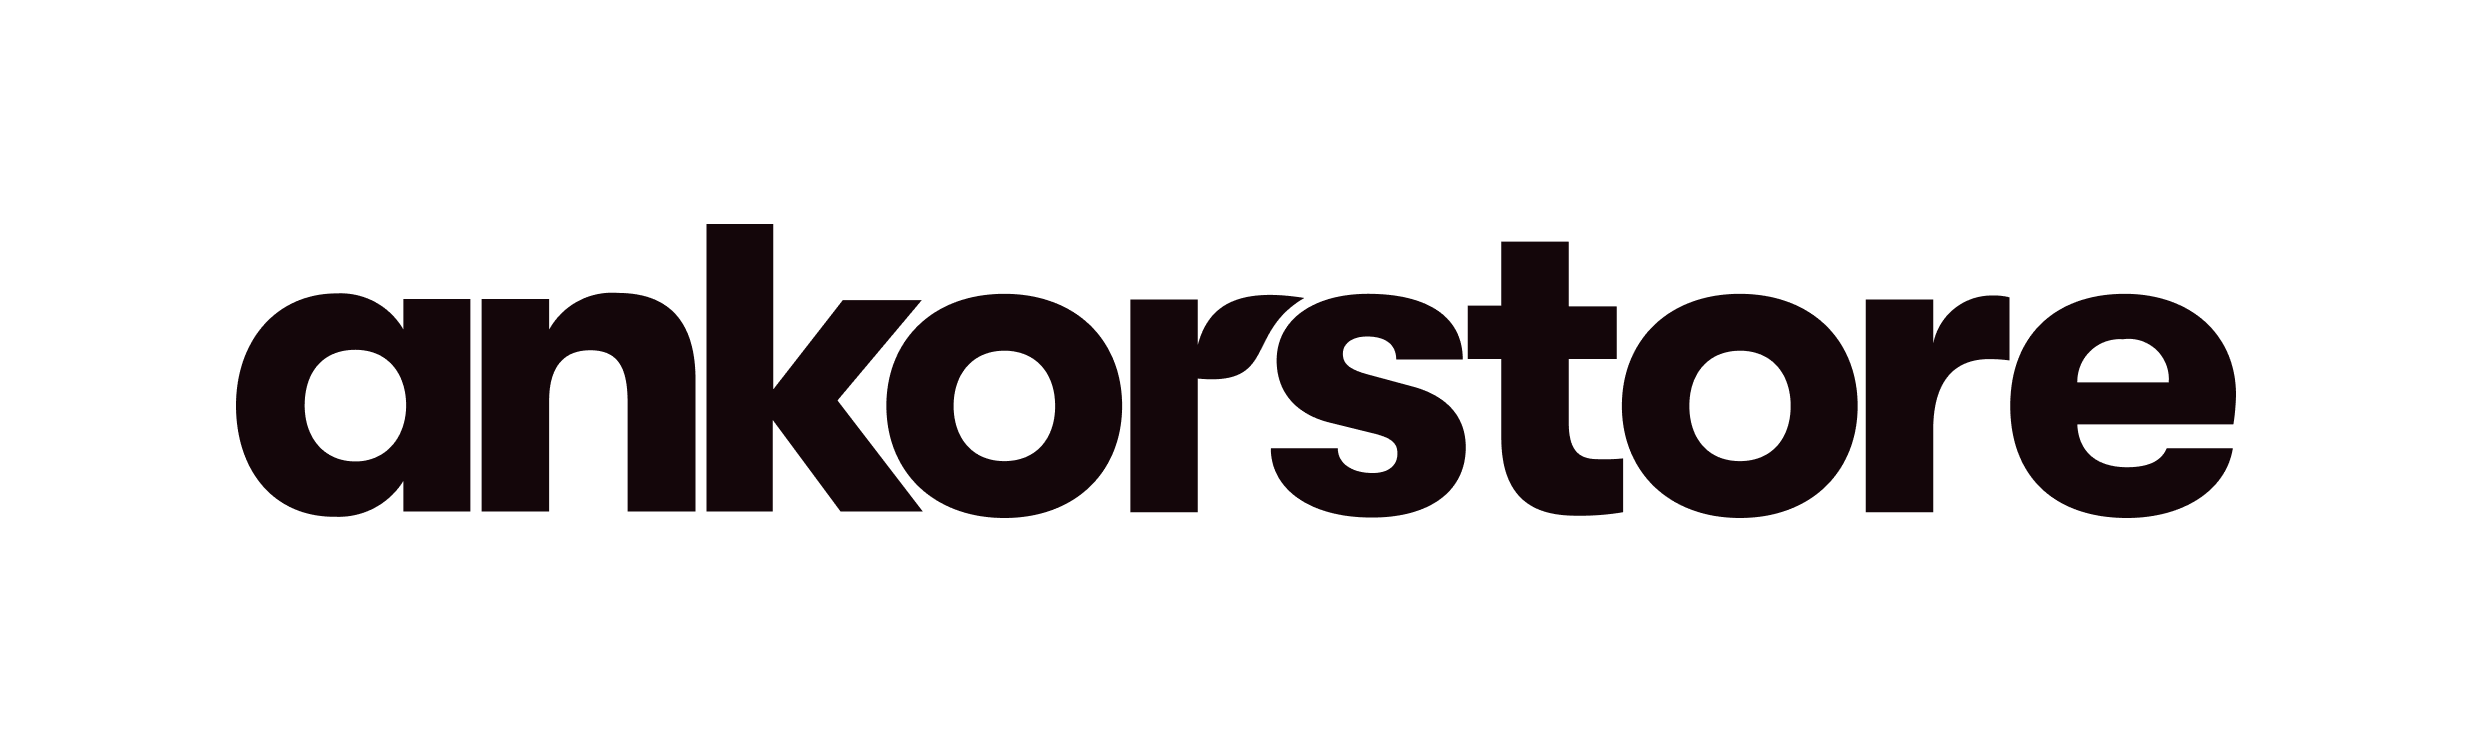 Ankorstore-logo